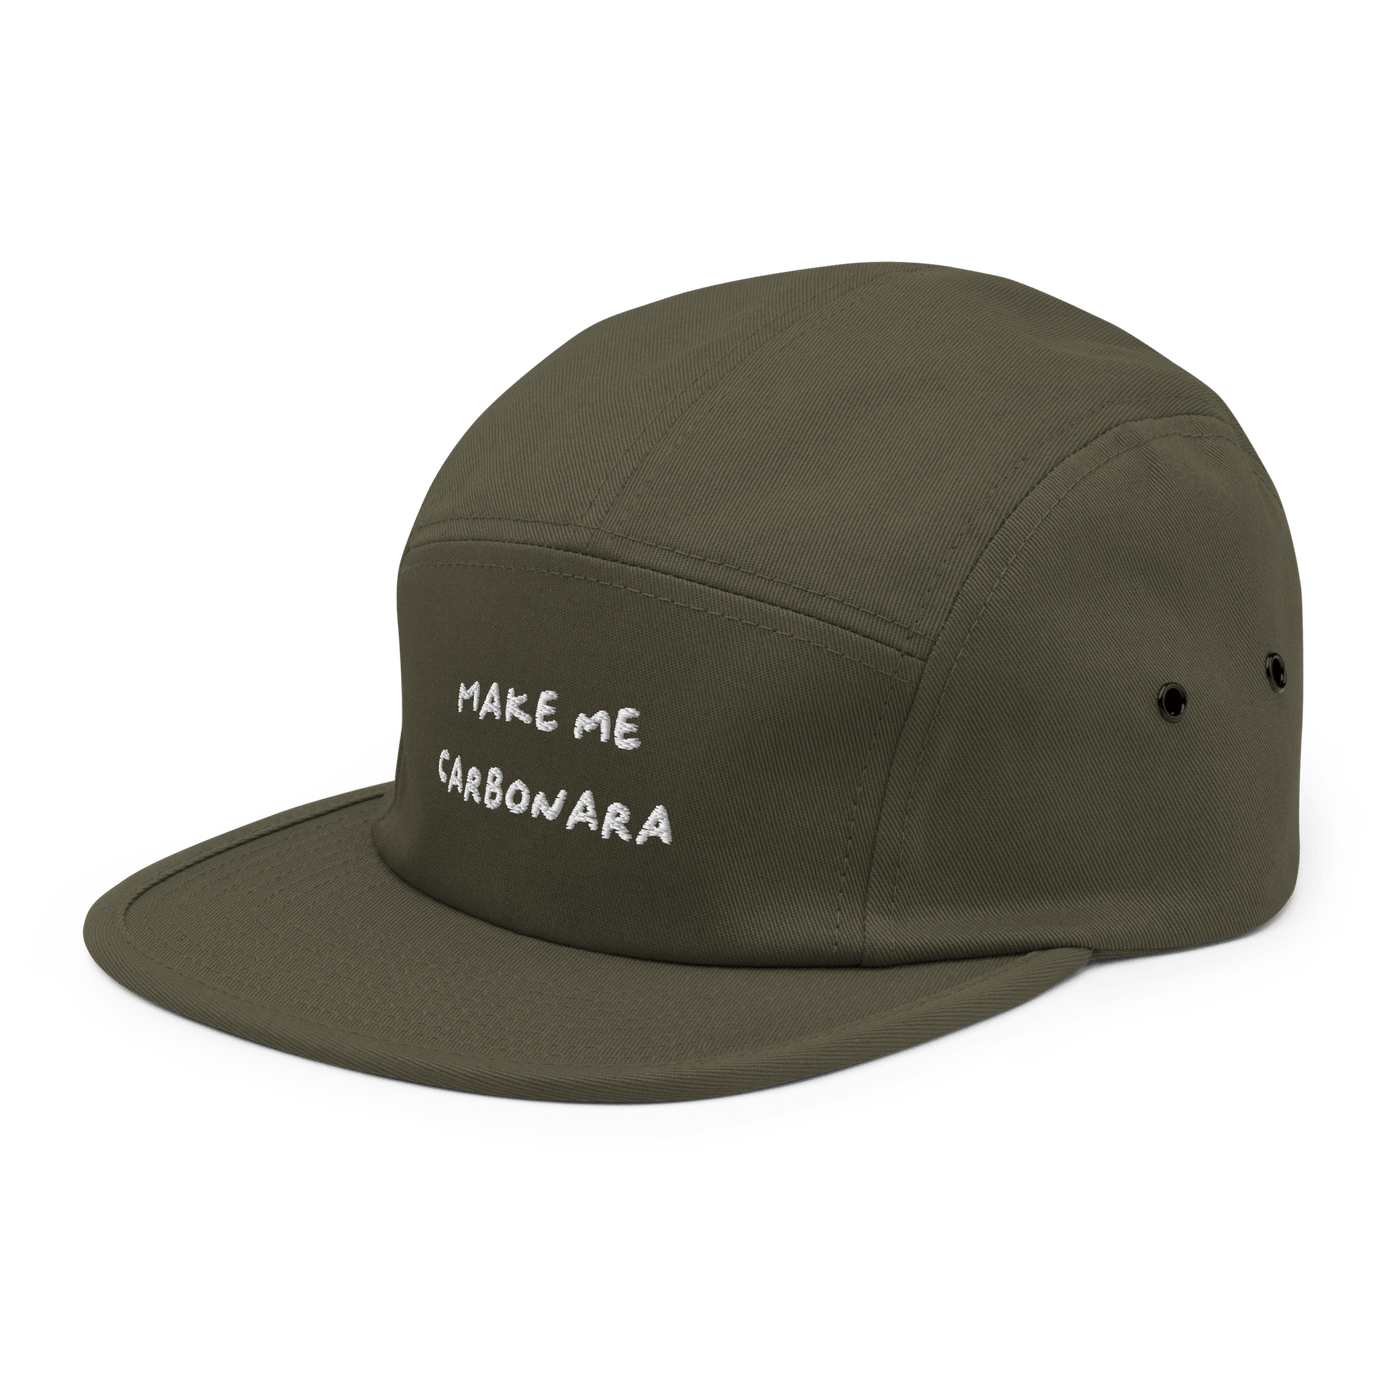 Make me Carbonara Five Panel Hat - Olive - - Just Another Cap Store